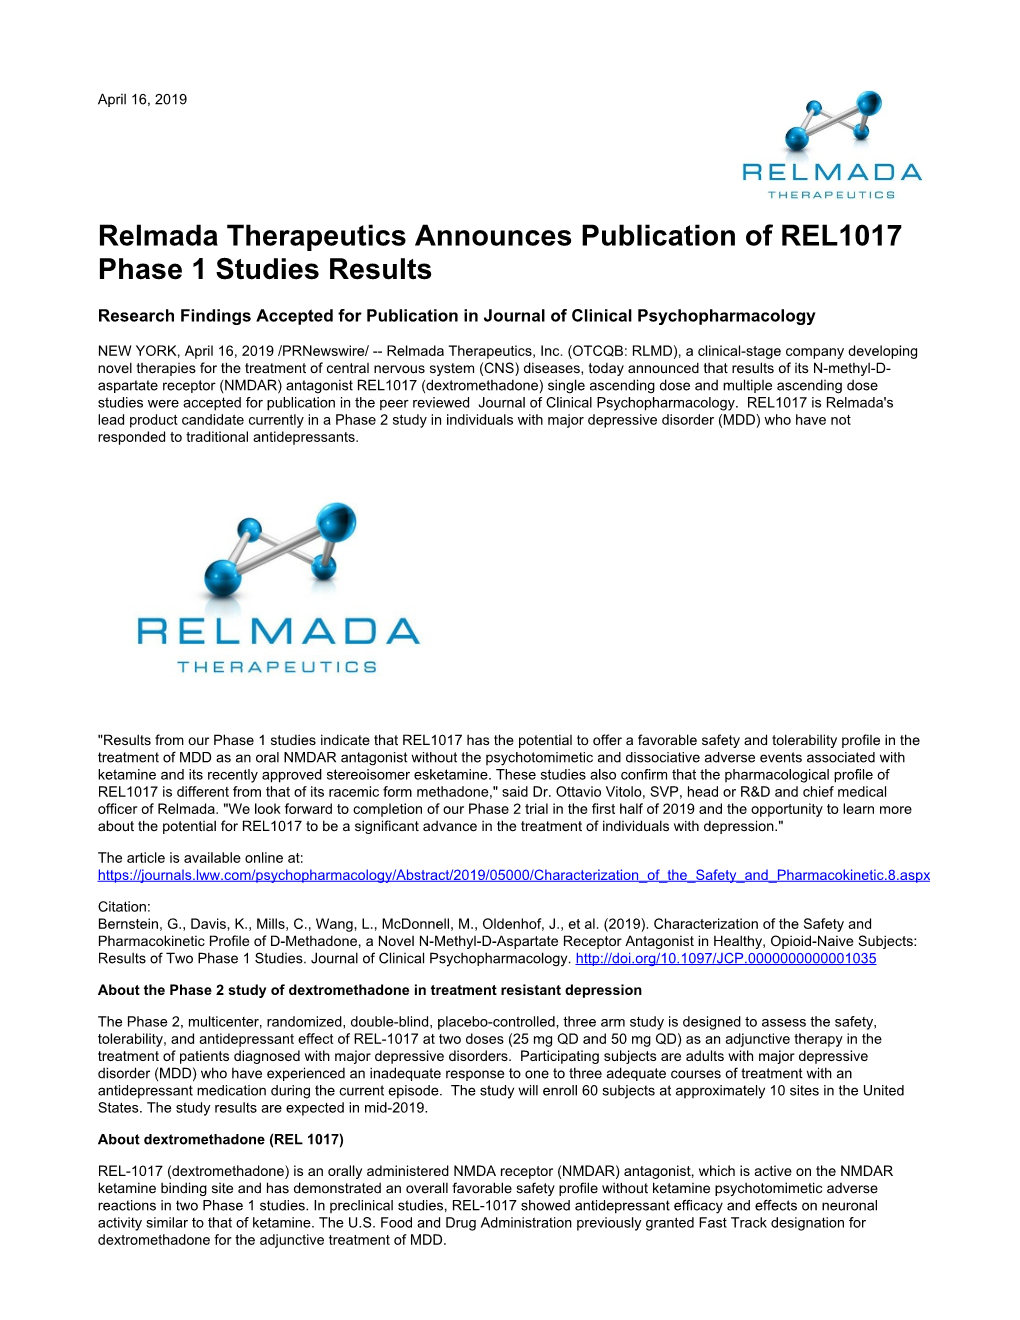 Relmada Therapeutics Announces Publication of REL1017 Phase 1 Studies Results